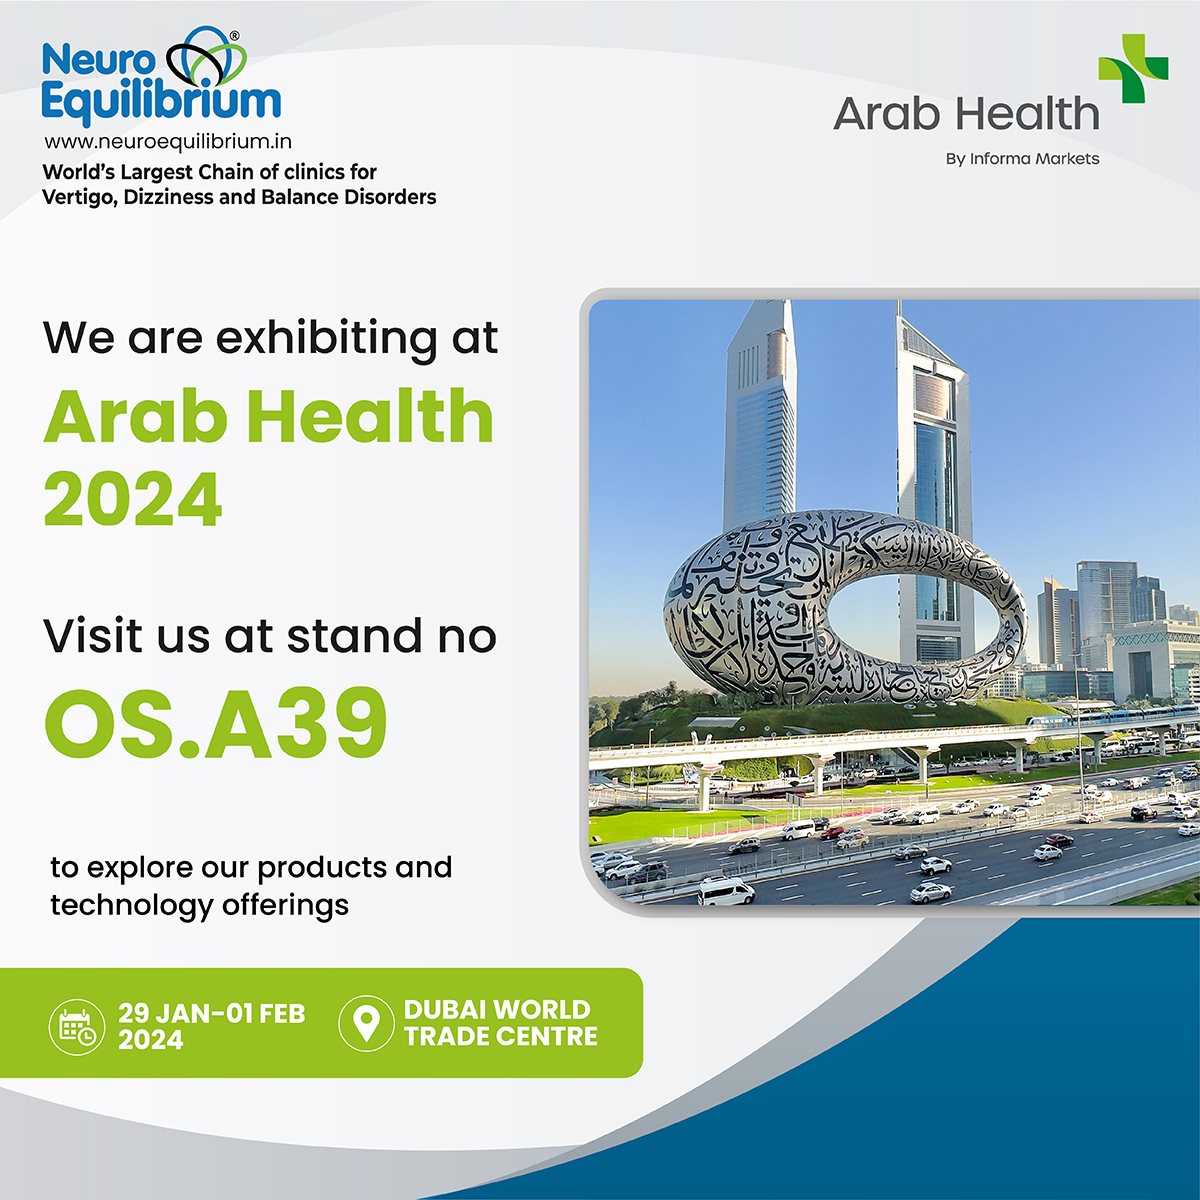 Please come and visit us at Arab Health 2024
#ArabHealth2024   #arabhealth #Arab  #dubai #uae #healthcare  #MiddleEast  #neuroequilibrium #dwtc #Health  #healthandwellness  #healthawareness #HealthcareInnovation